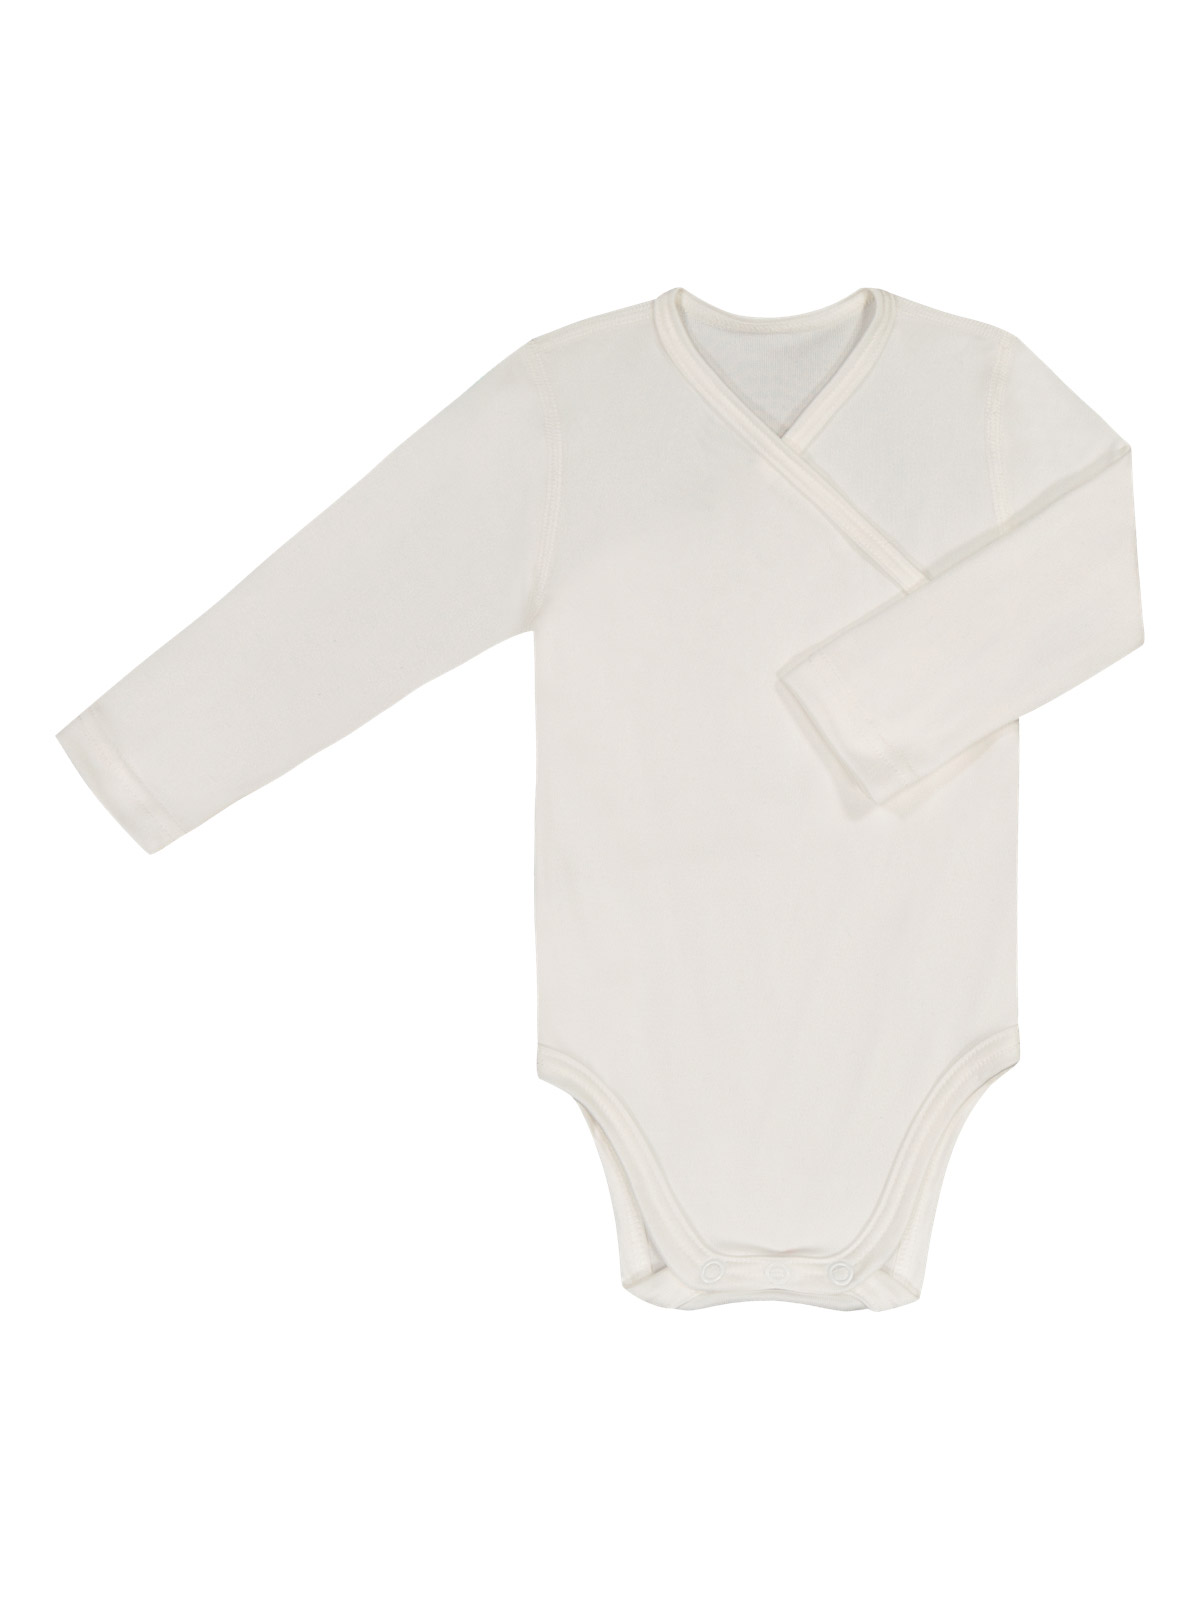 Ruskovillan valkoinen vauvojen luomusilkkibody. Ruskovilla's white organic silk baby body with long sleeves.